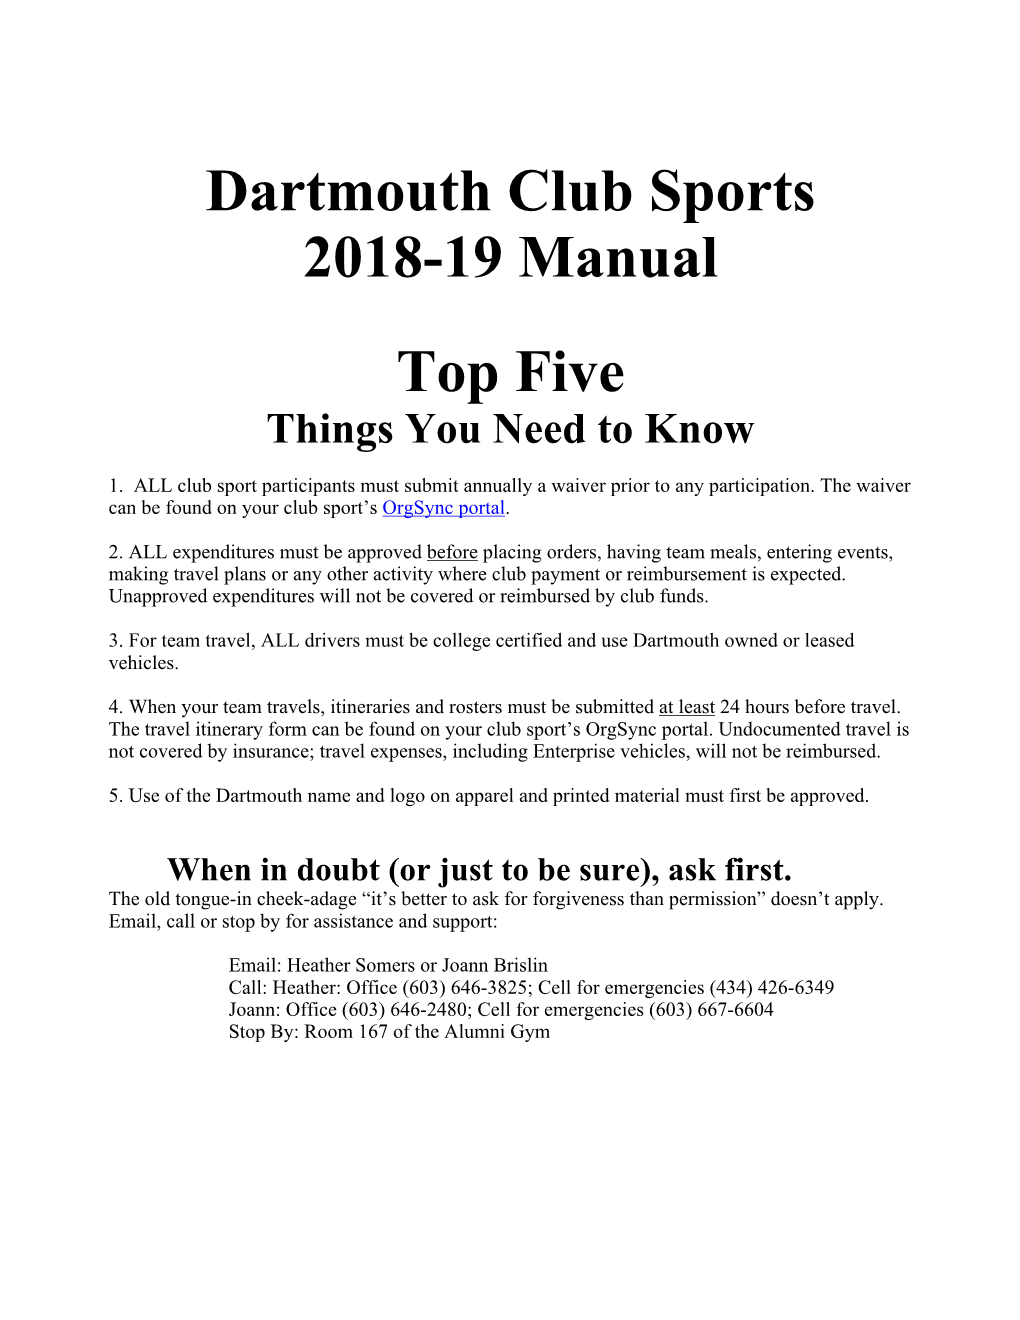 Dartmouth Club Sports 2018-19 Manual Top Five